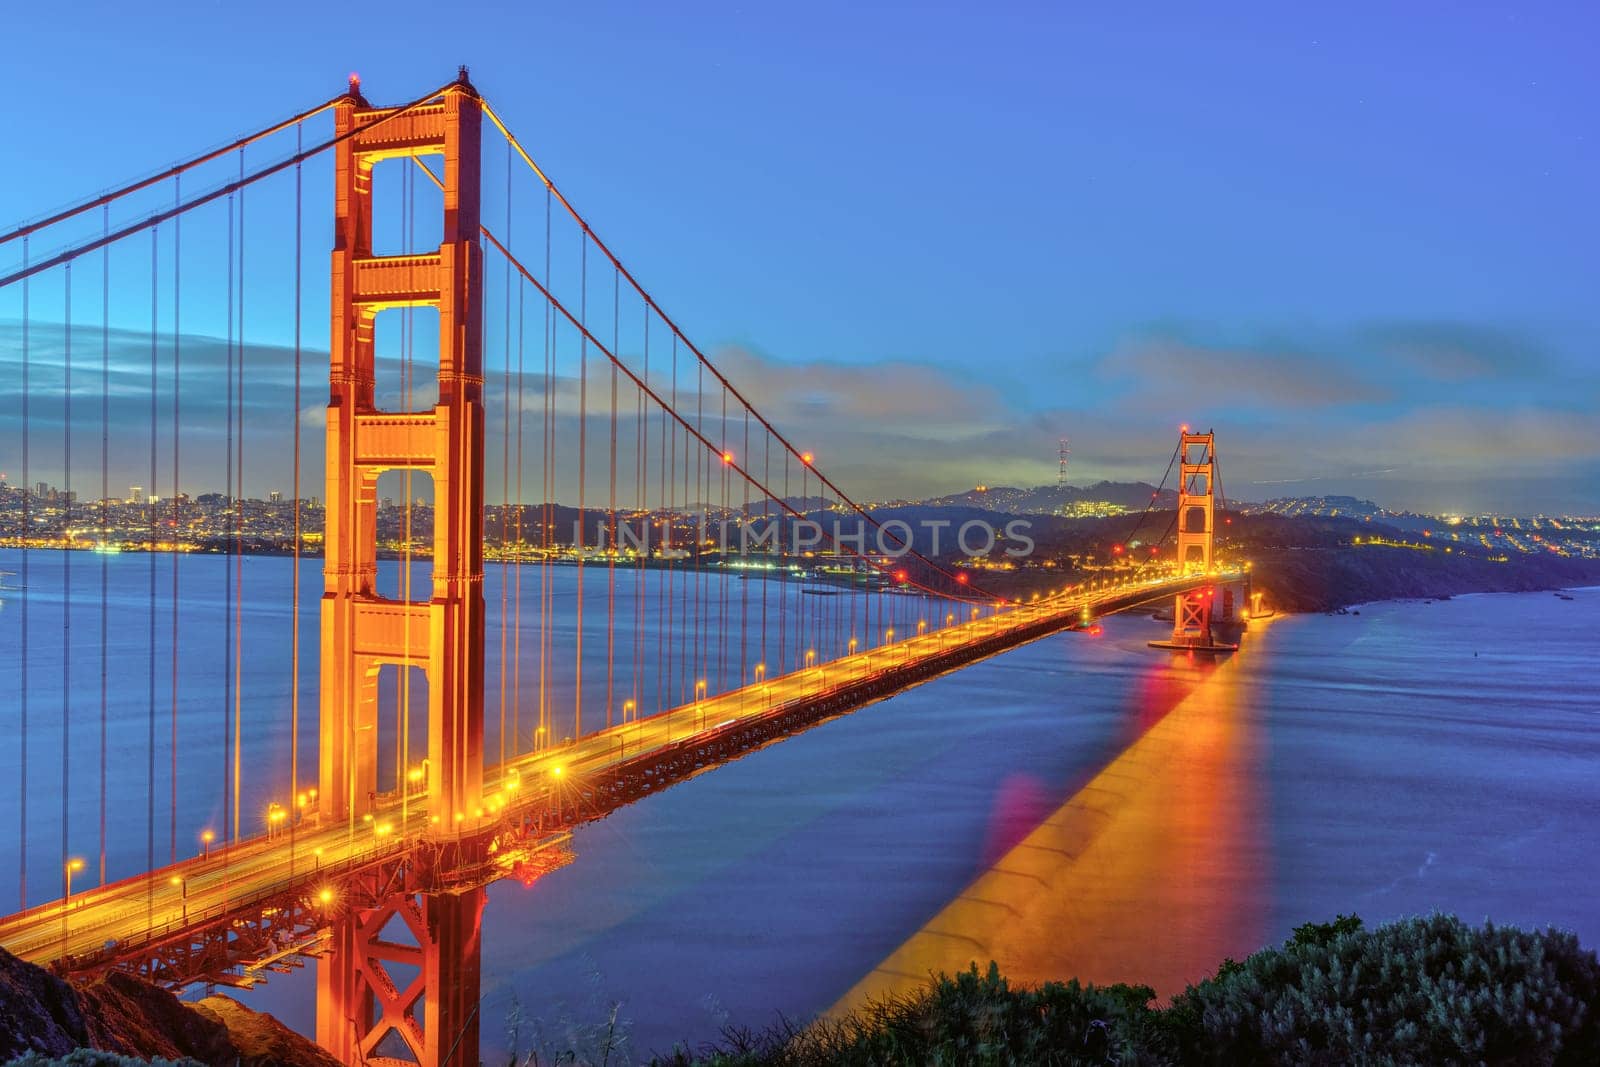 The iconic Golden Gate Bridge in San Francisco by elxeneize